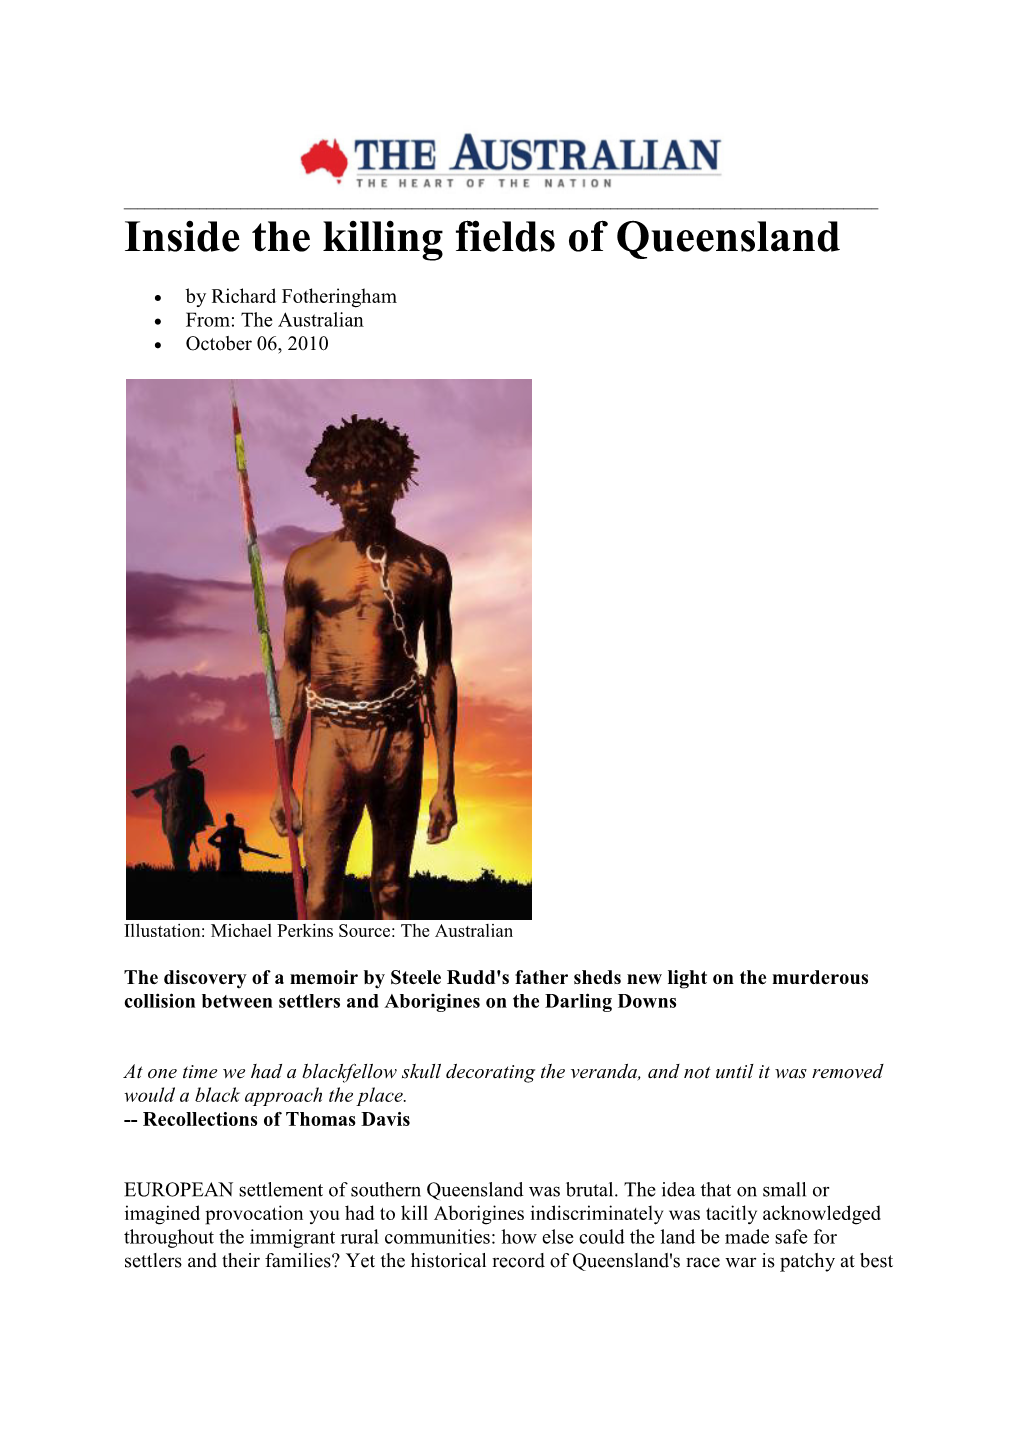 Inside the Killing Fields of Queensland